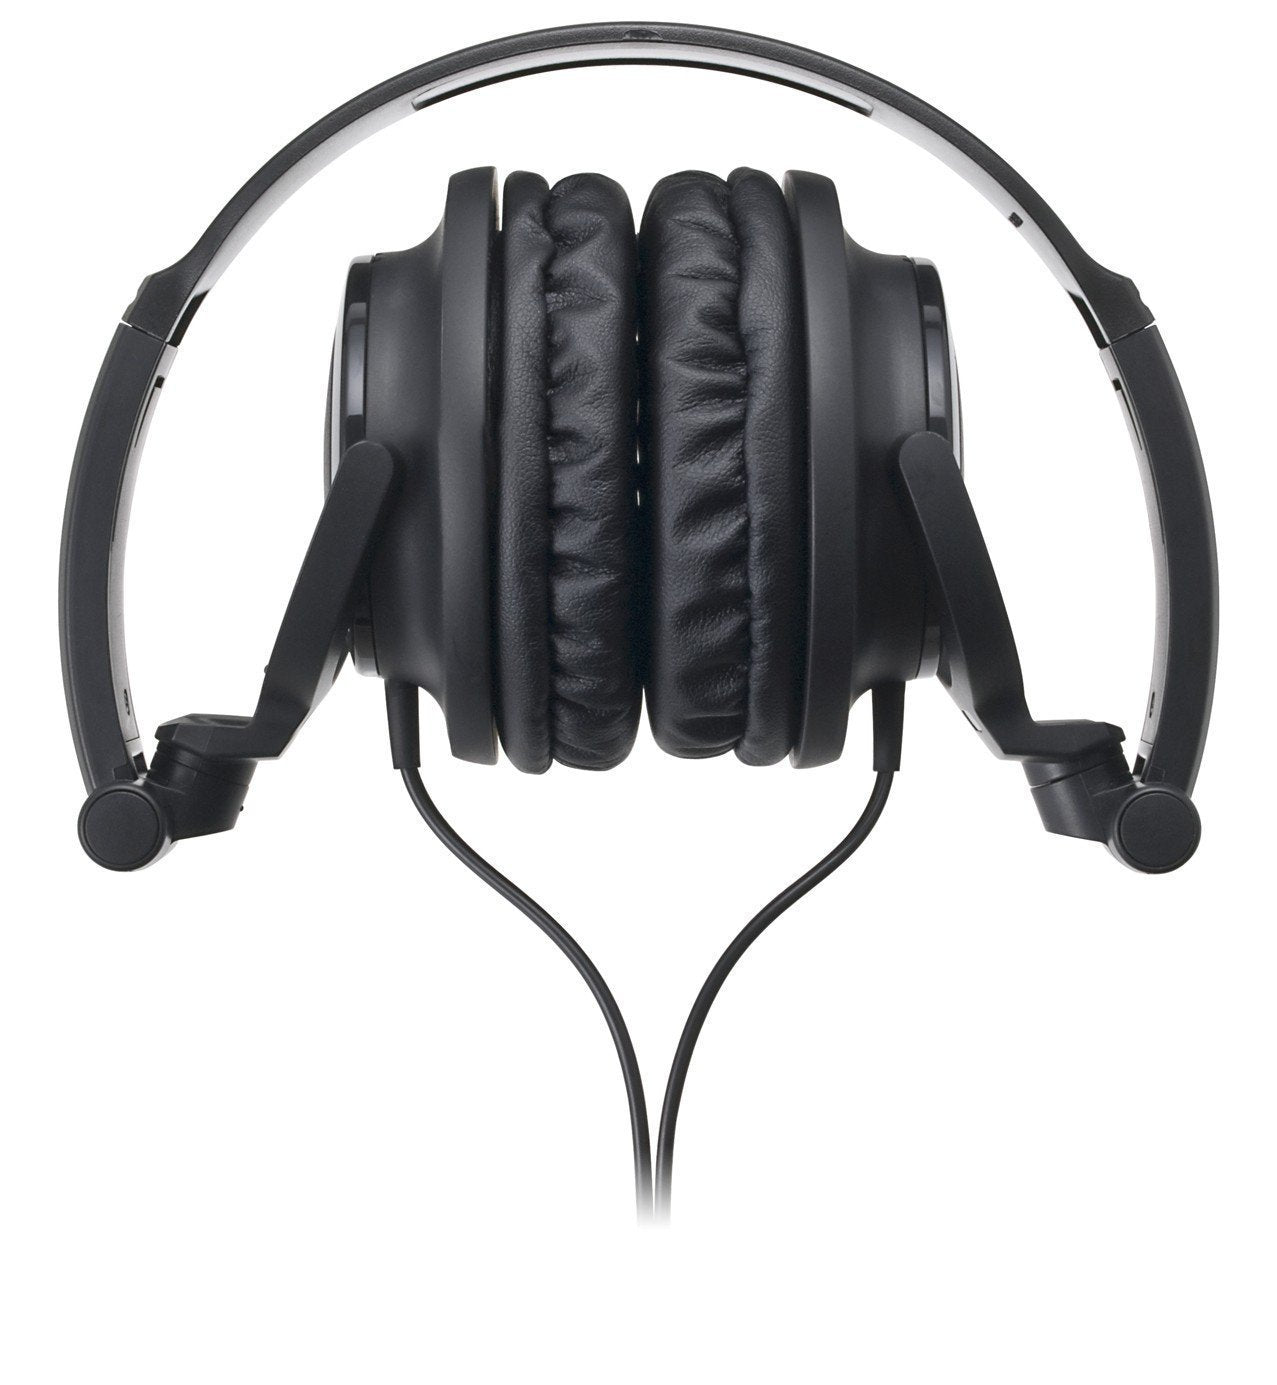 Audio Technica ATH-SJ33 BK Black | DJ Style Portable Headphones (Japan Import)